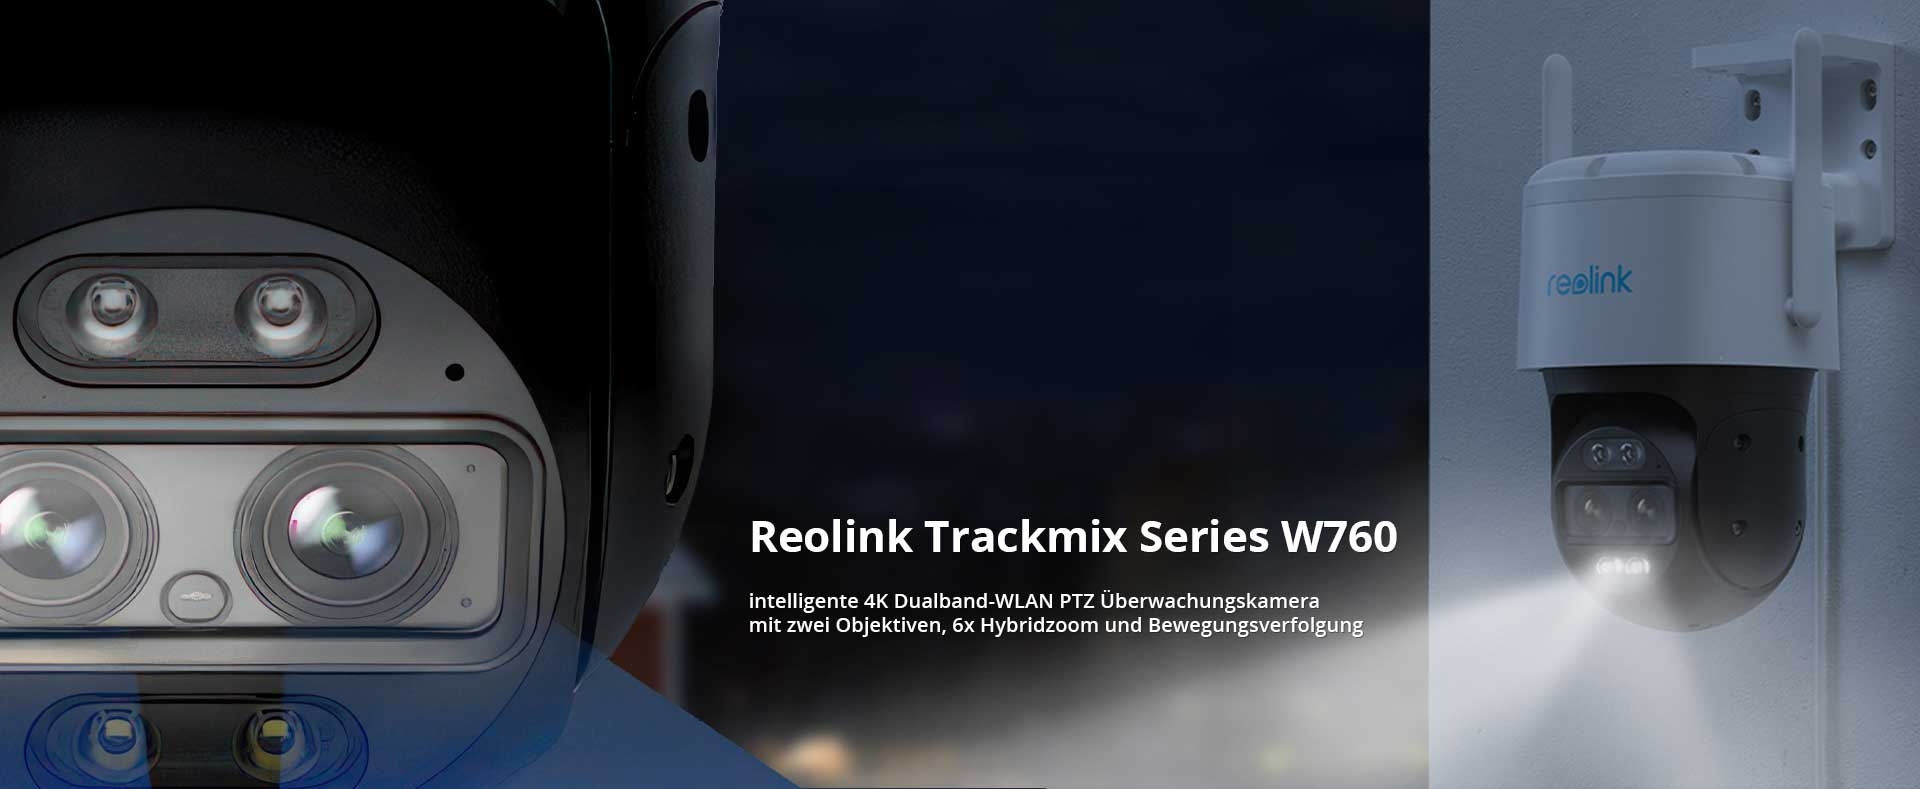 Reolink Trackmix Series W760 4K Dualband-WLAN PTZ Überwachungskamera